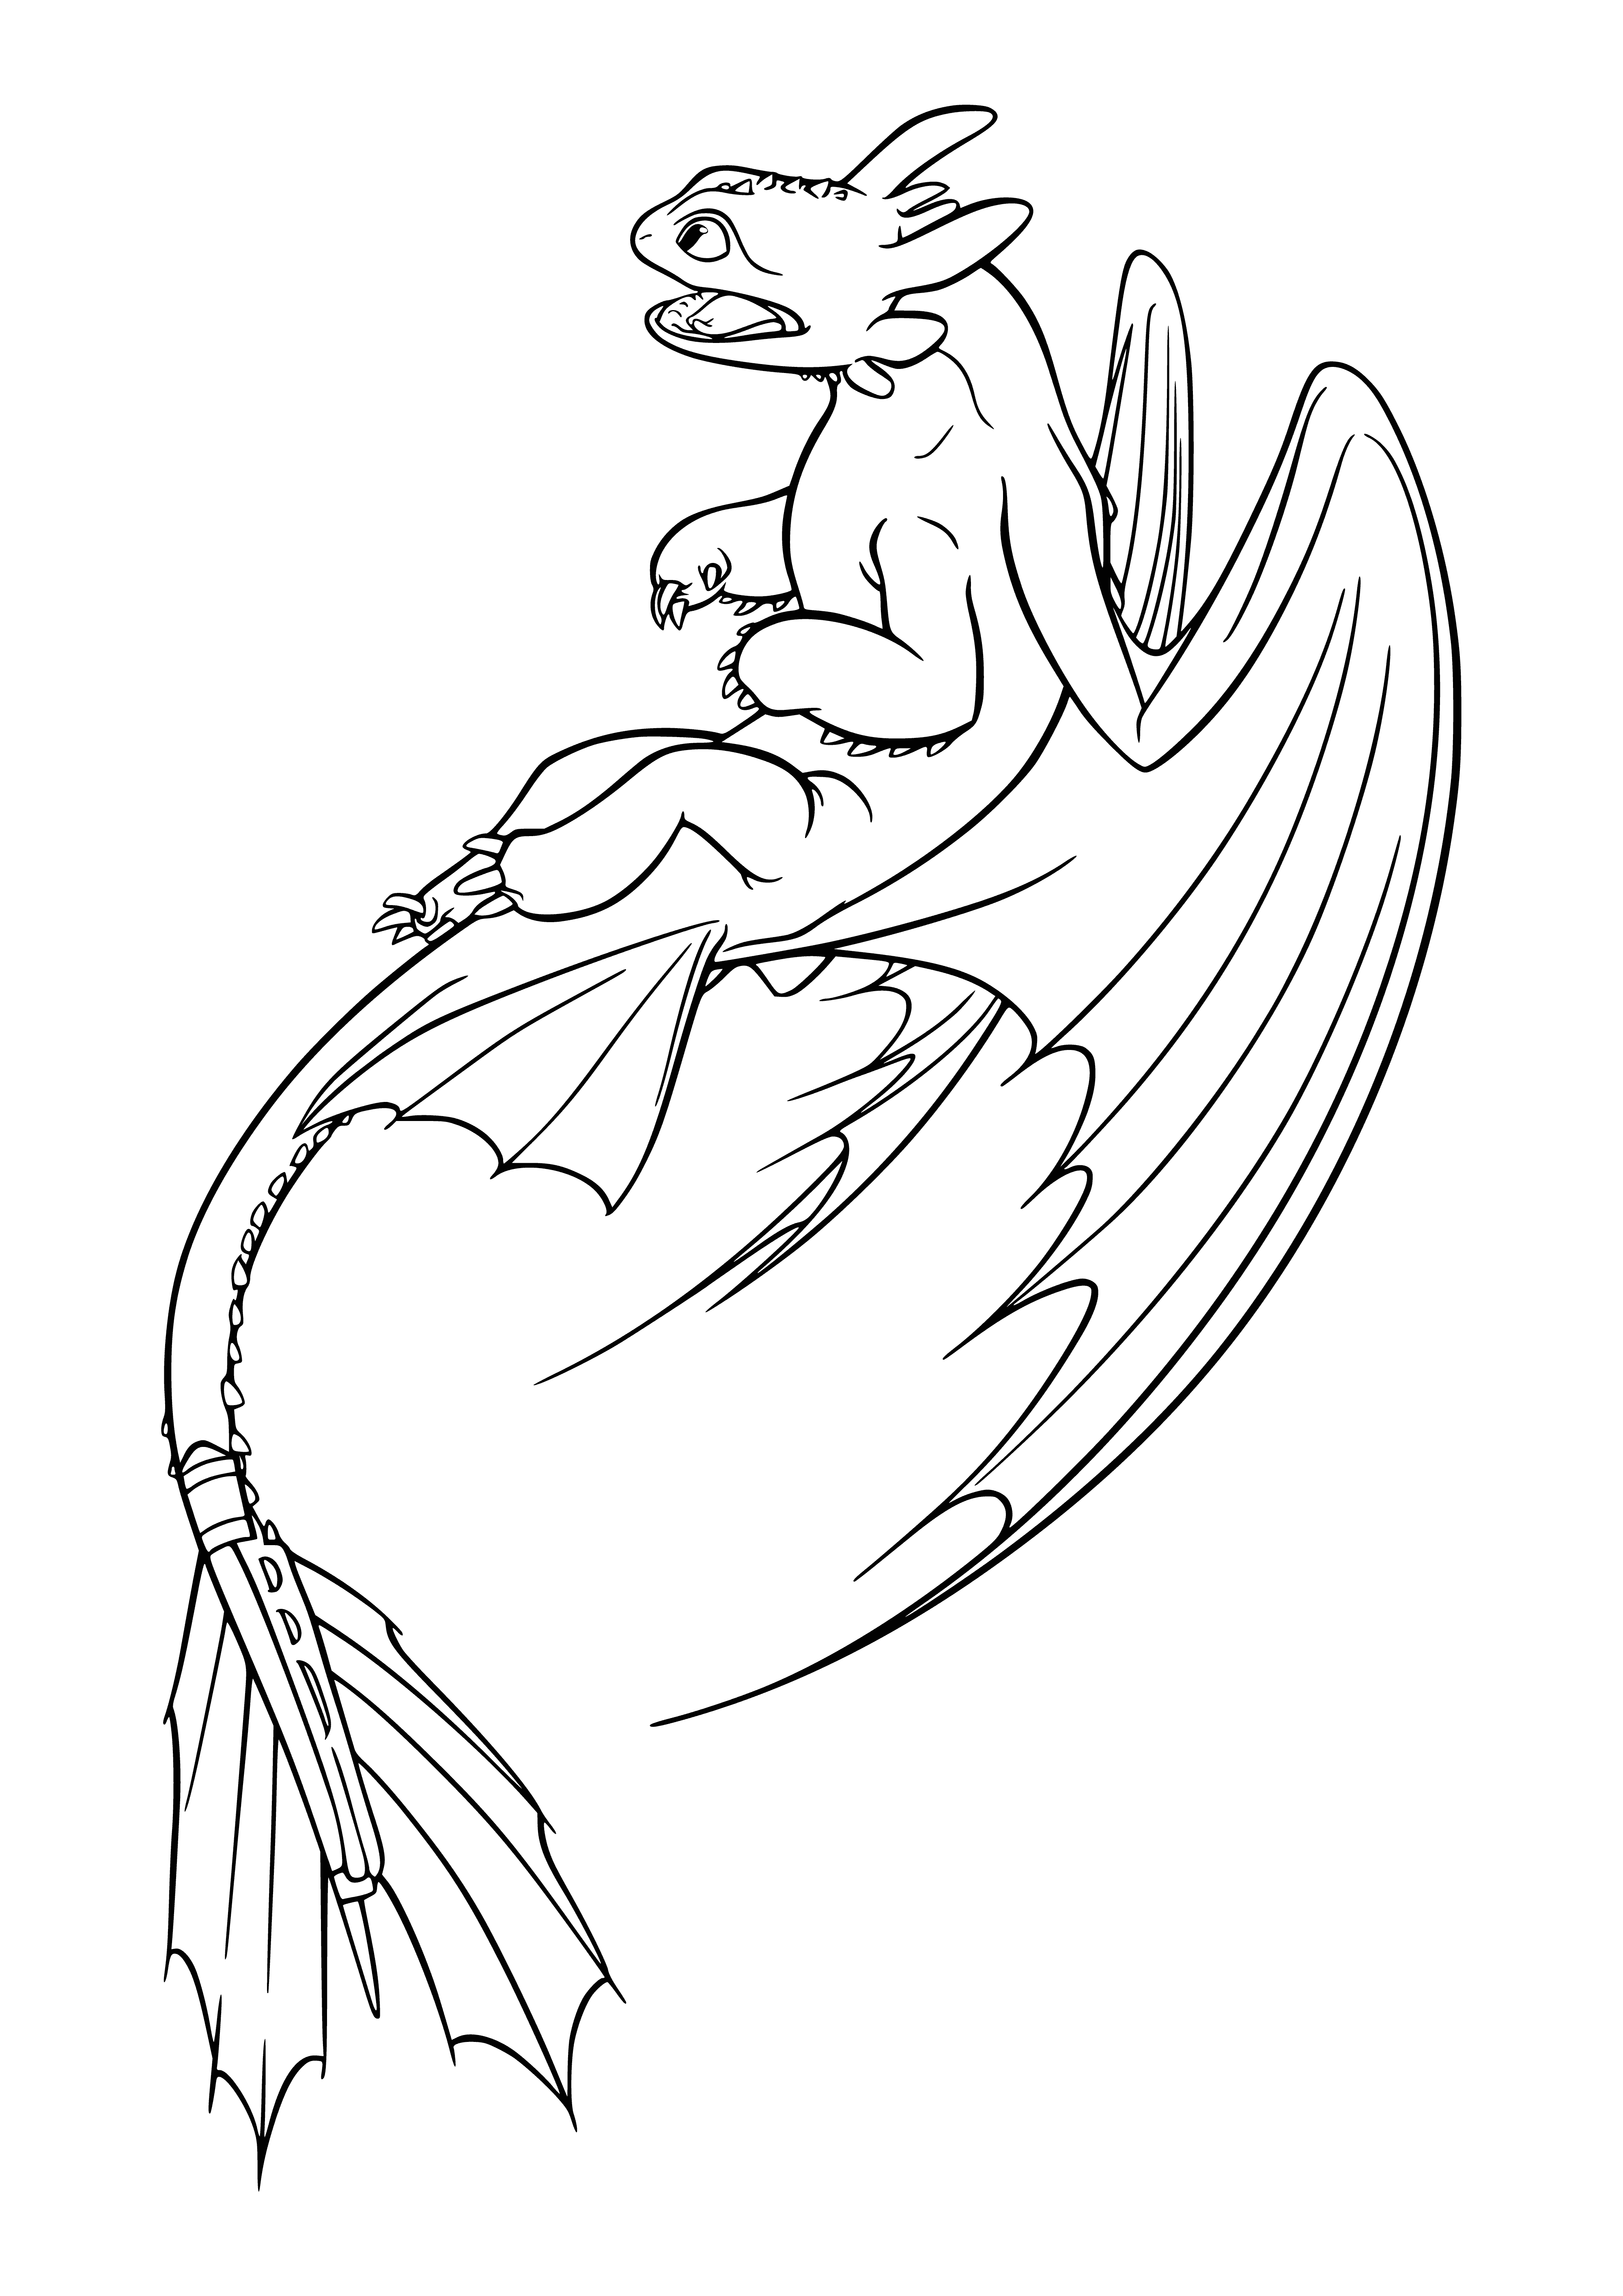 Dragon Bezzubik coloring page